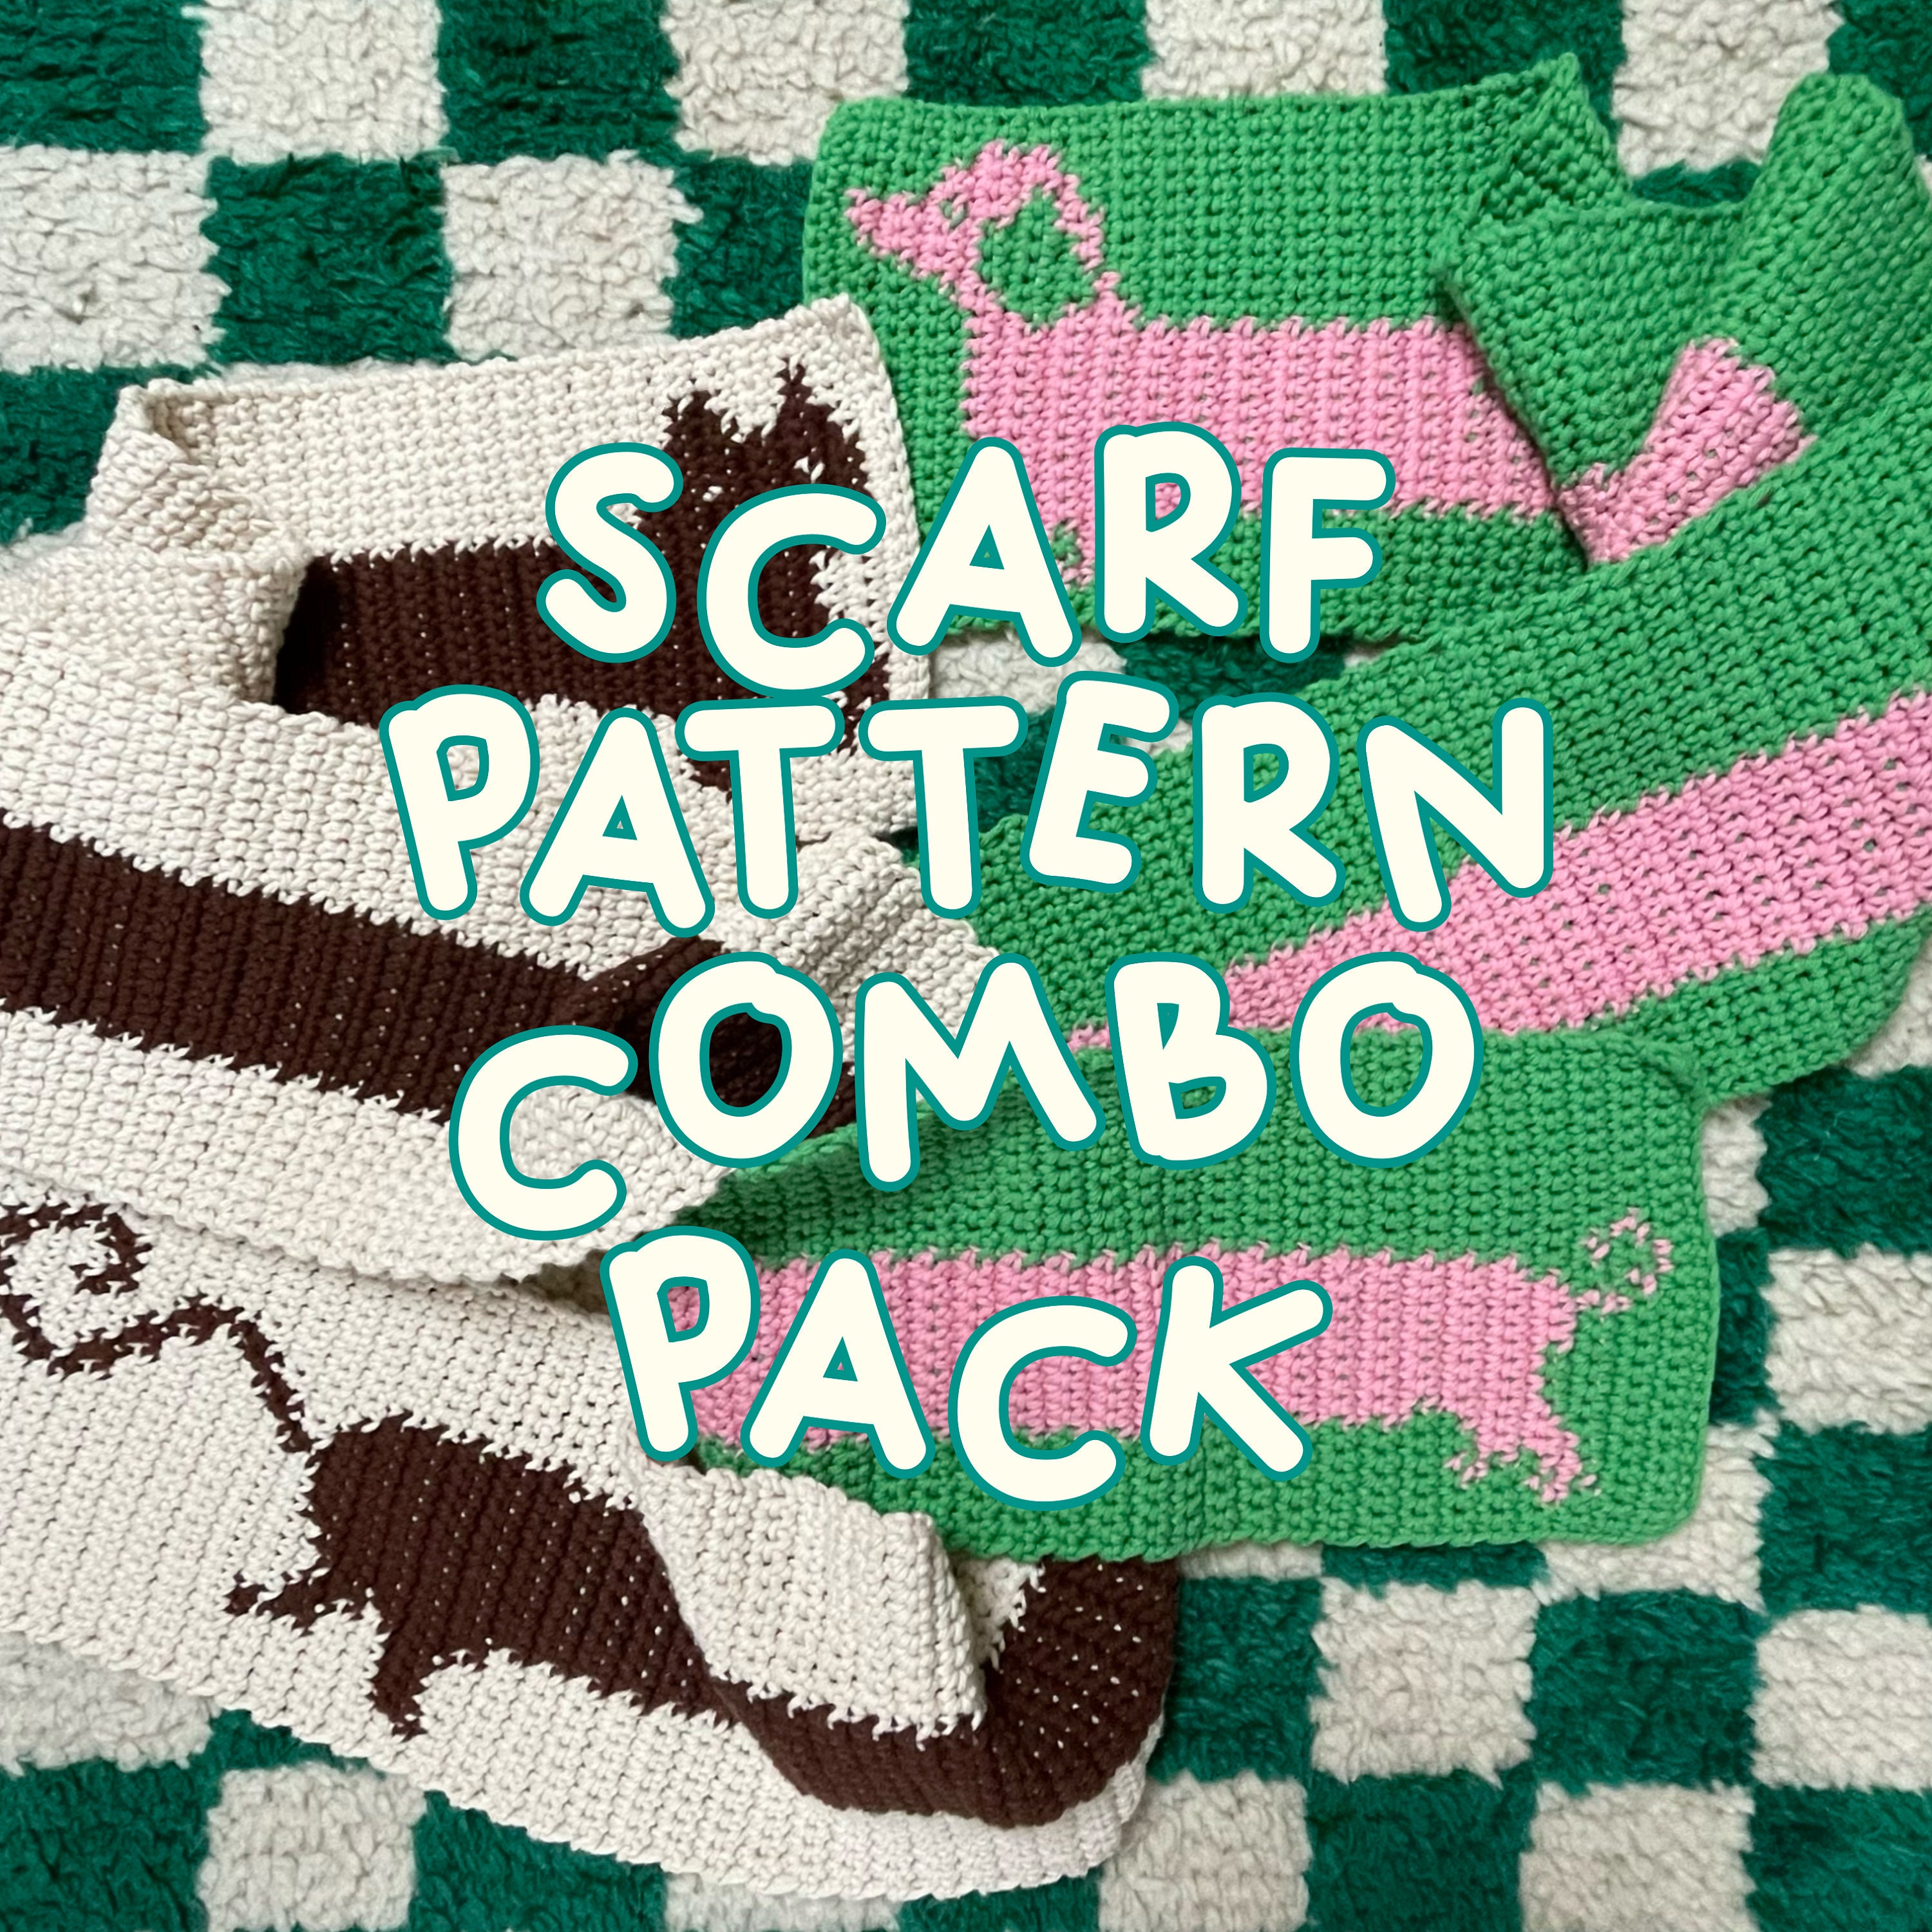 Shrek SC (Single Crochet) Square Throw Blanket Graphghan Crochet Pattern -  PDF Download